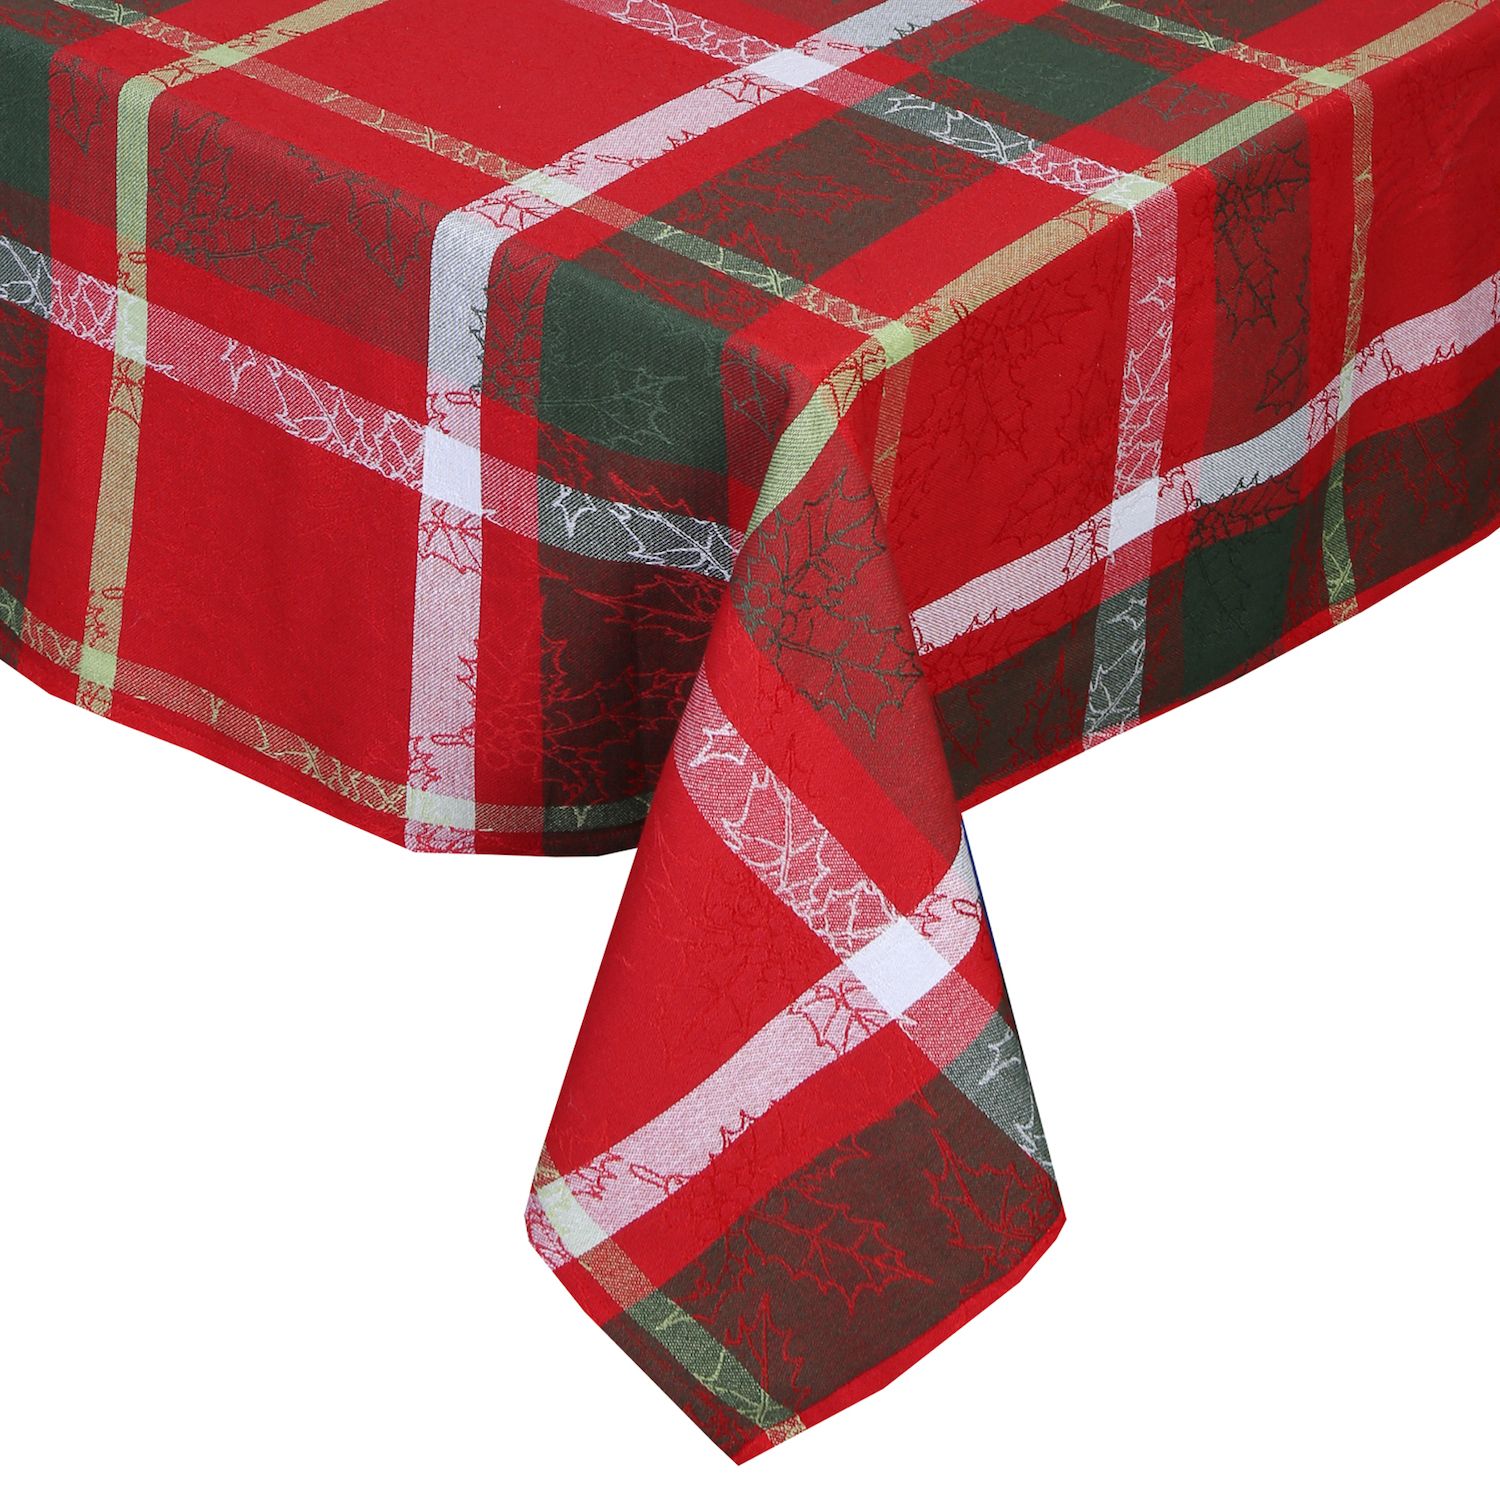 A plaid tablecloth is a festive staple.